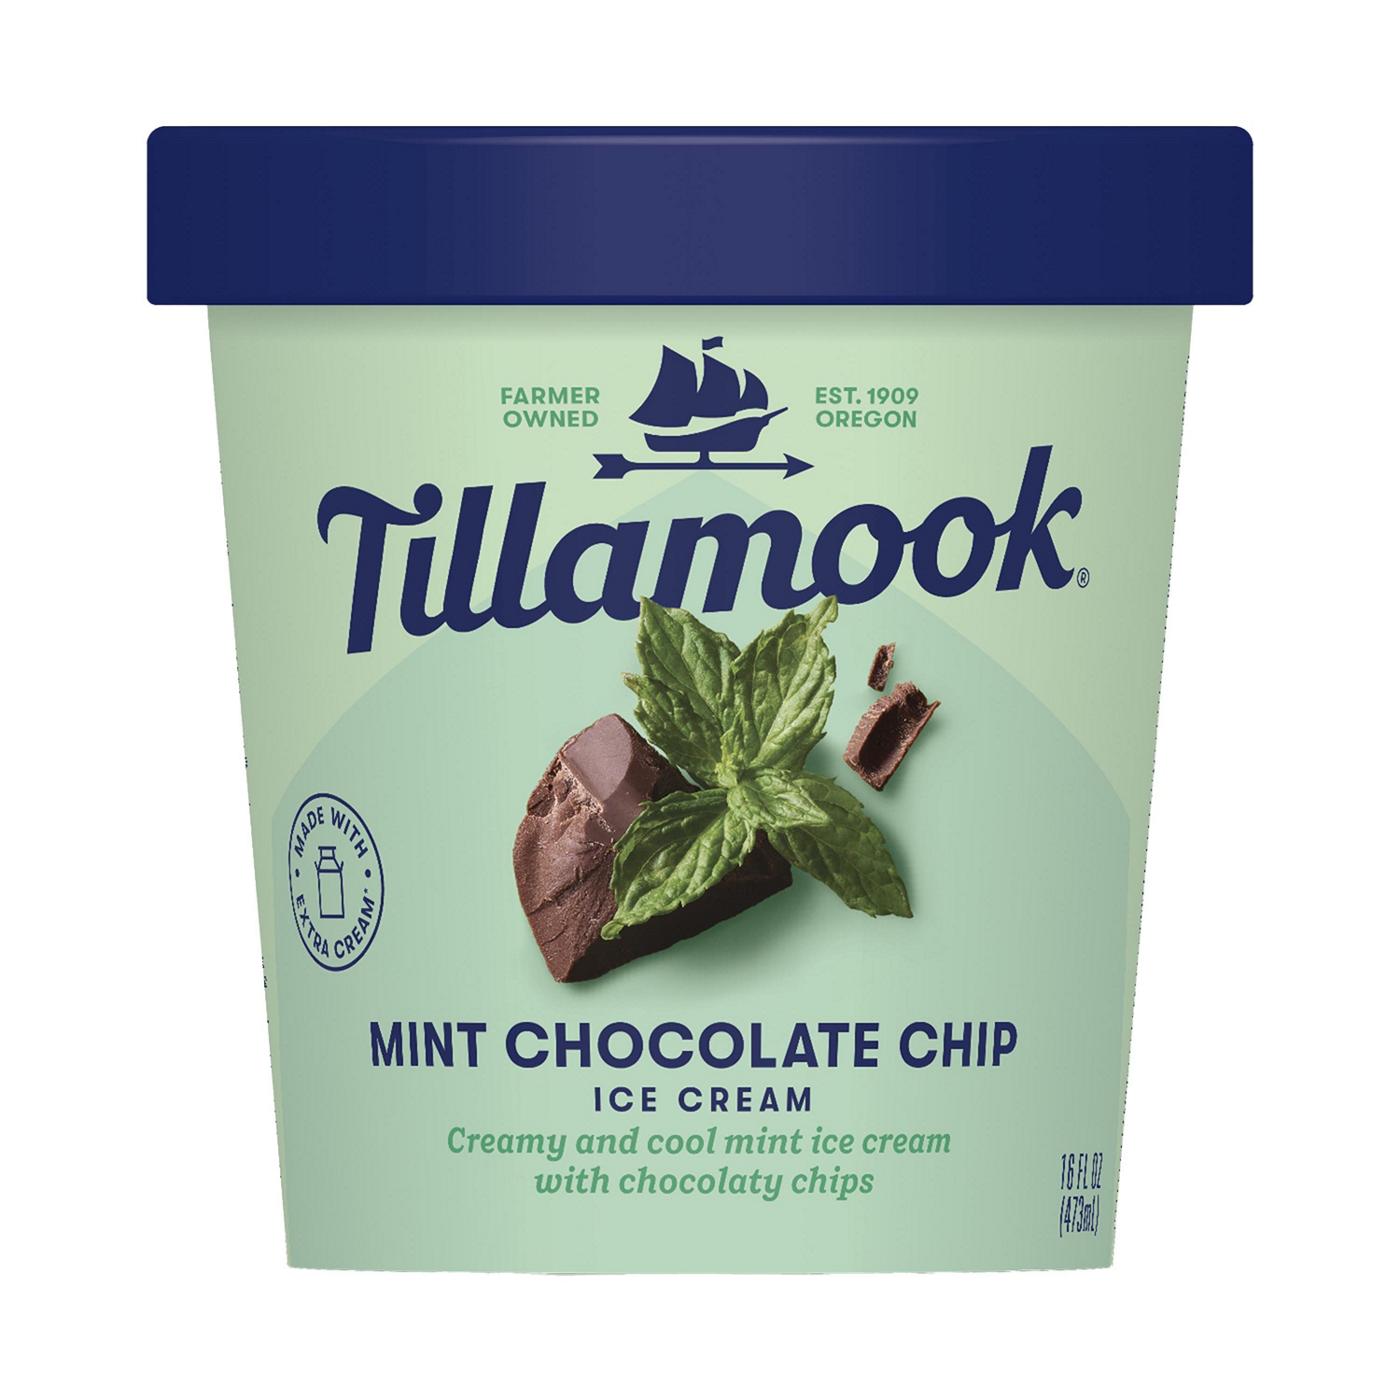 Tillamook Mint Chocolate Chip Ice Cream; image 1 of 3